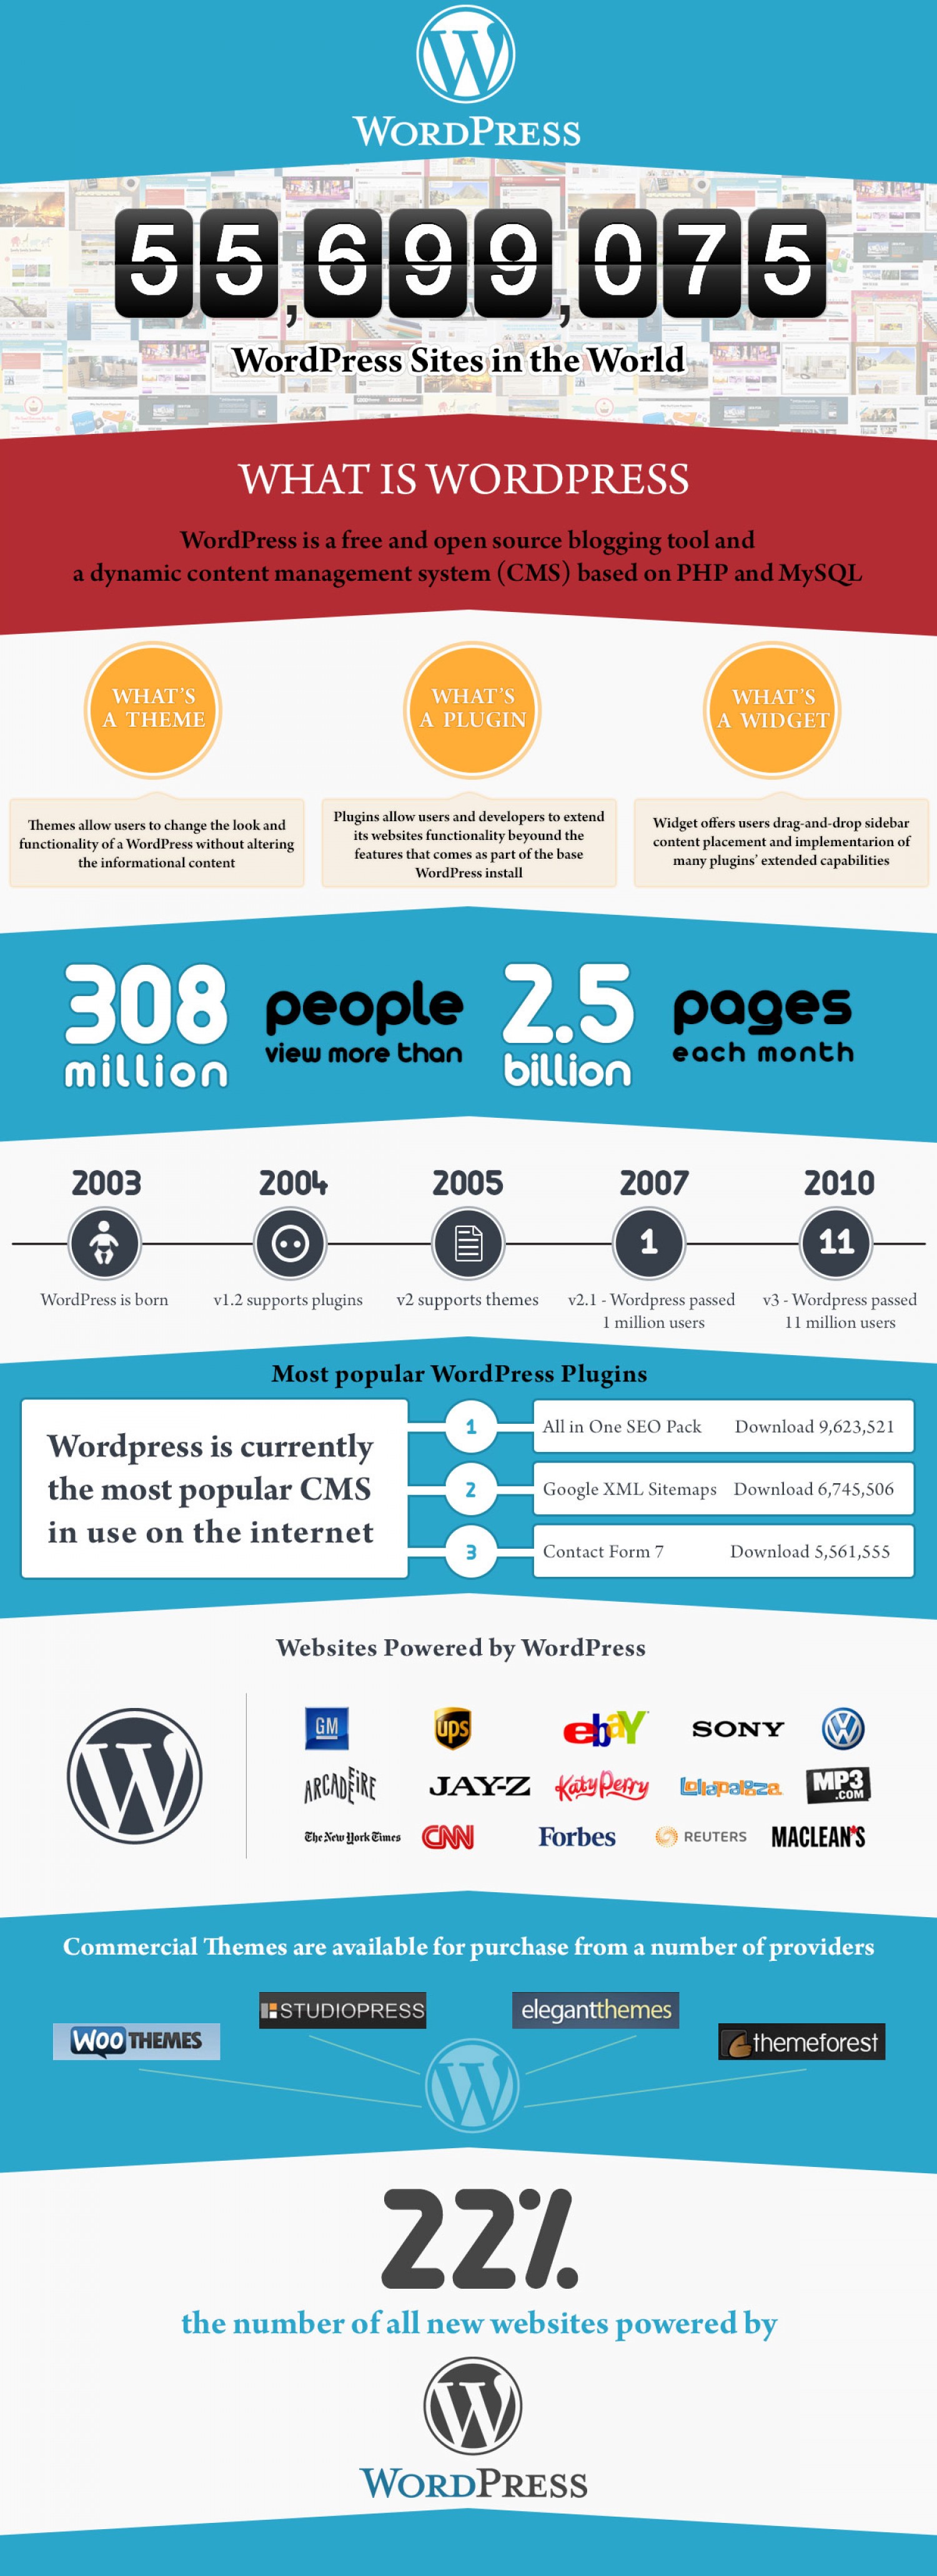 4. WordPress sites in the world